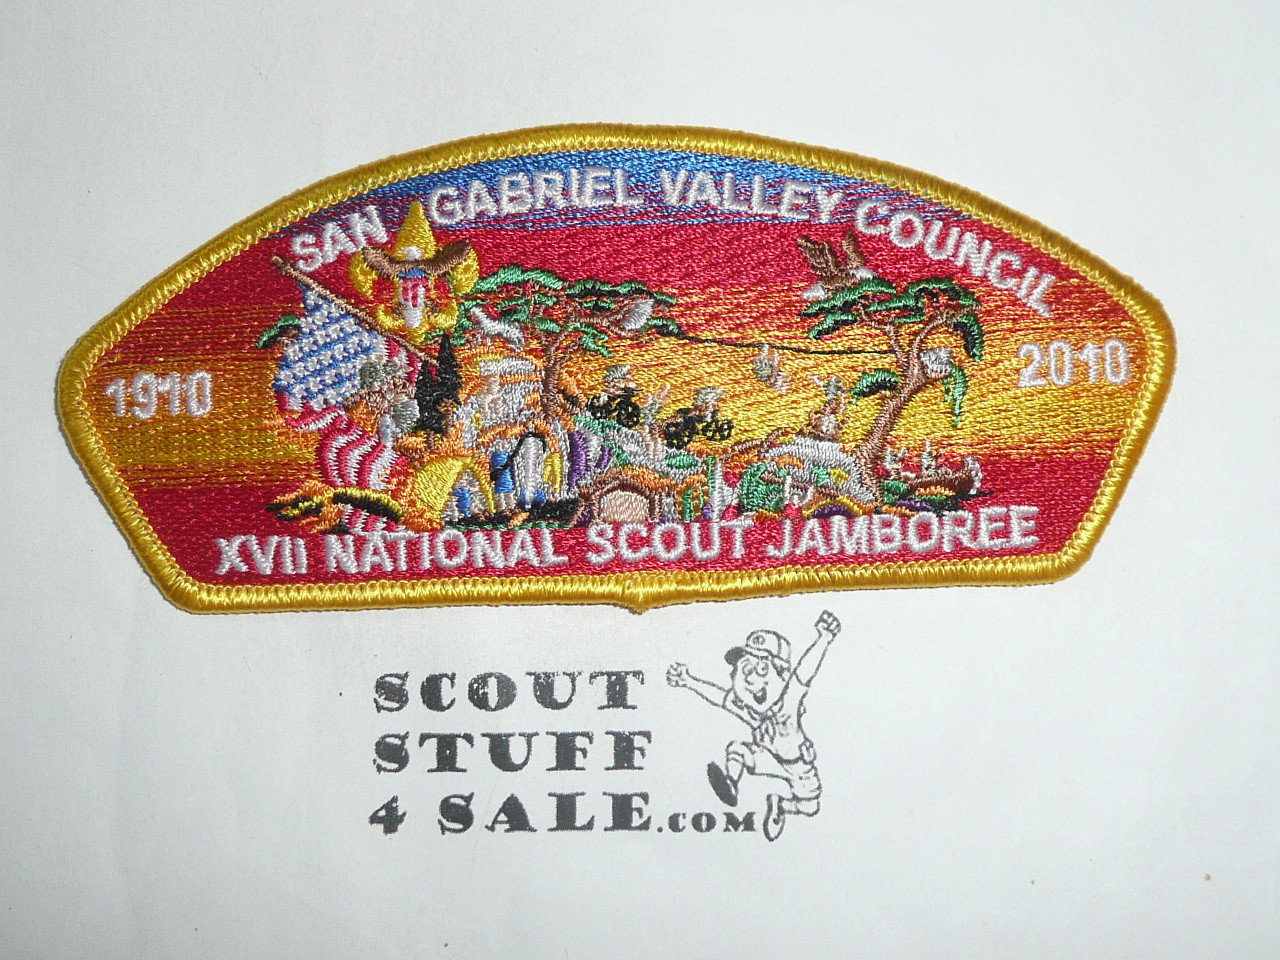 2010 National Jamboree JSP - San Gabriel Valley Council Jamboree Shoulder Patch, yellow